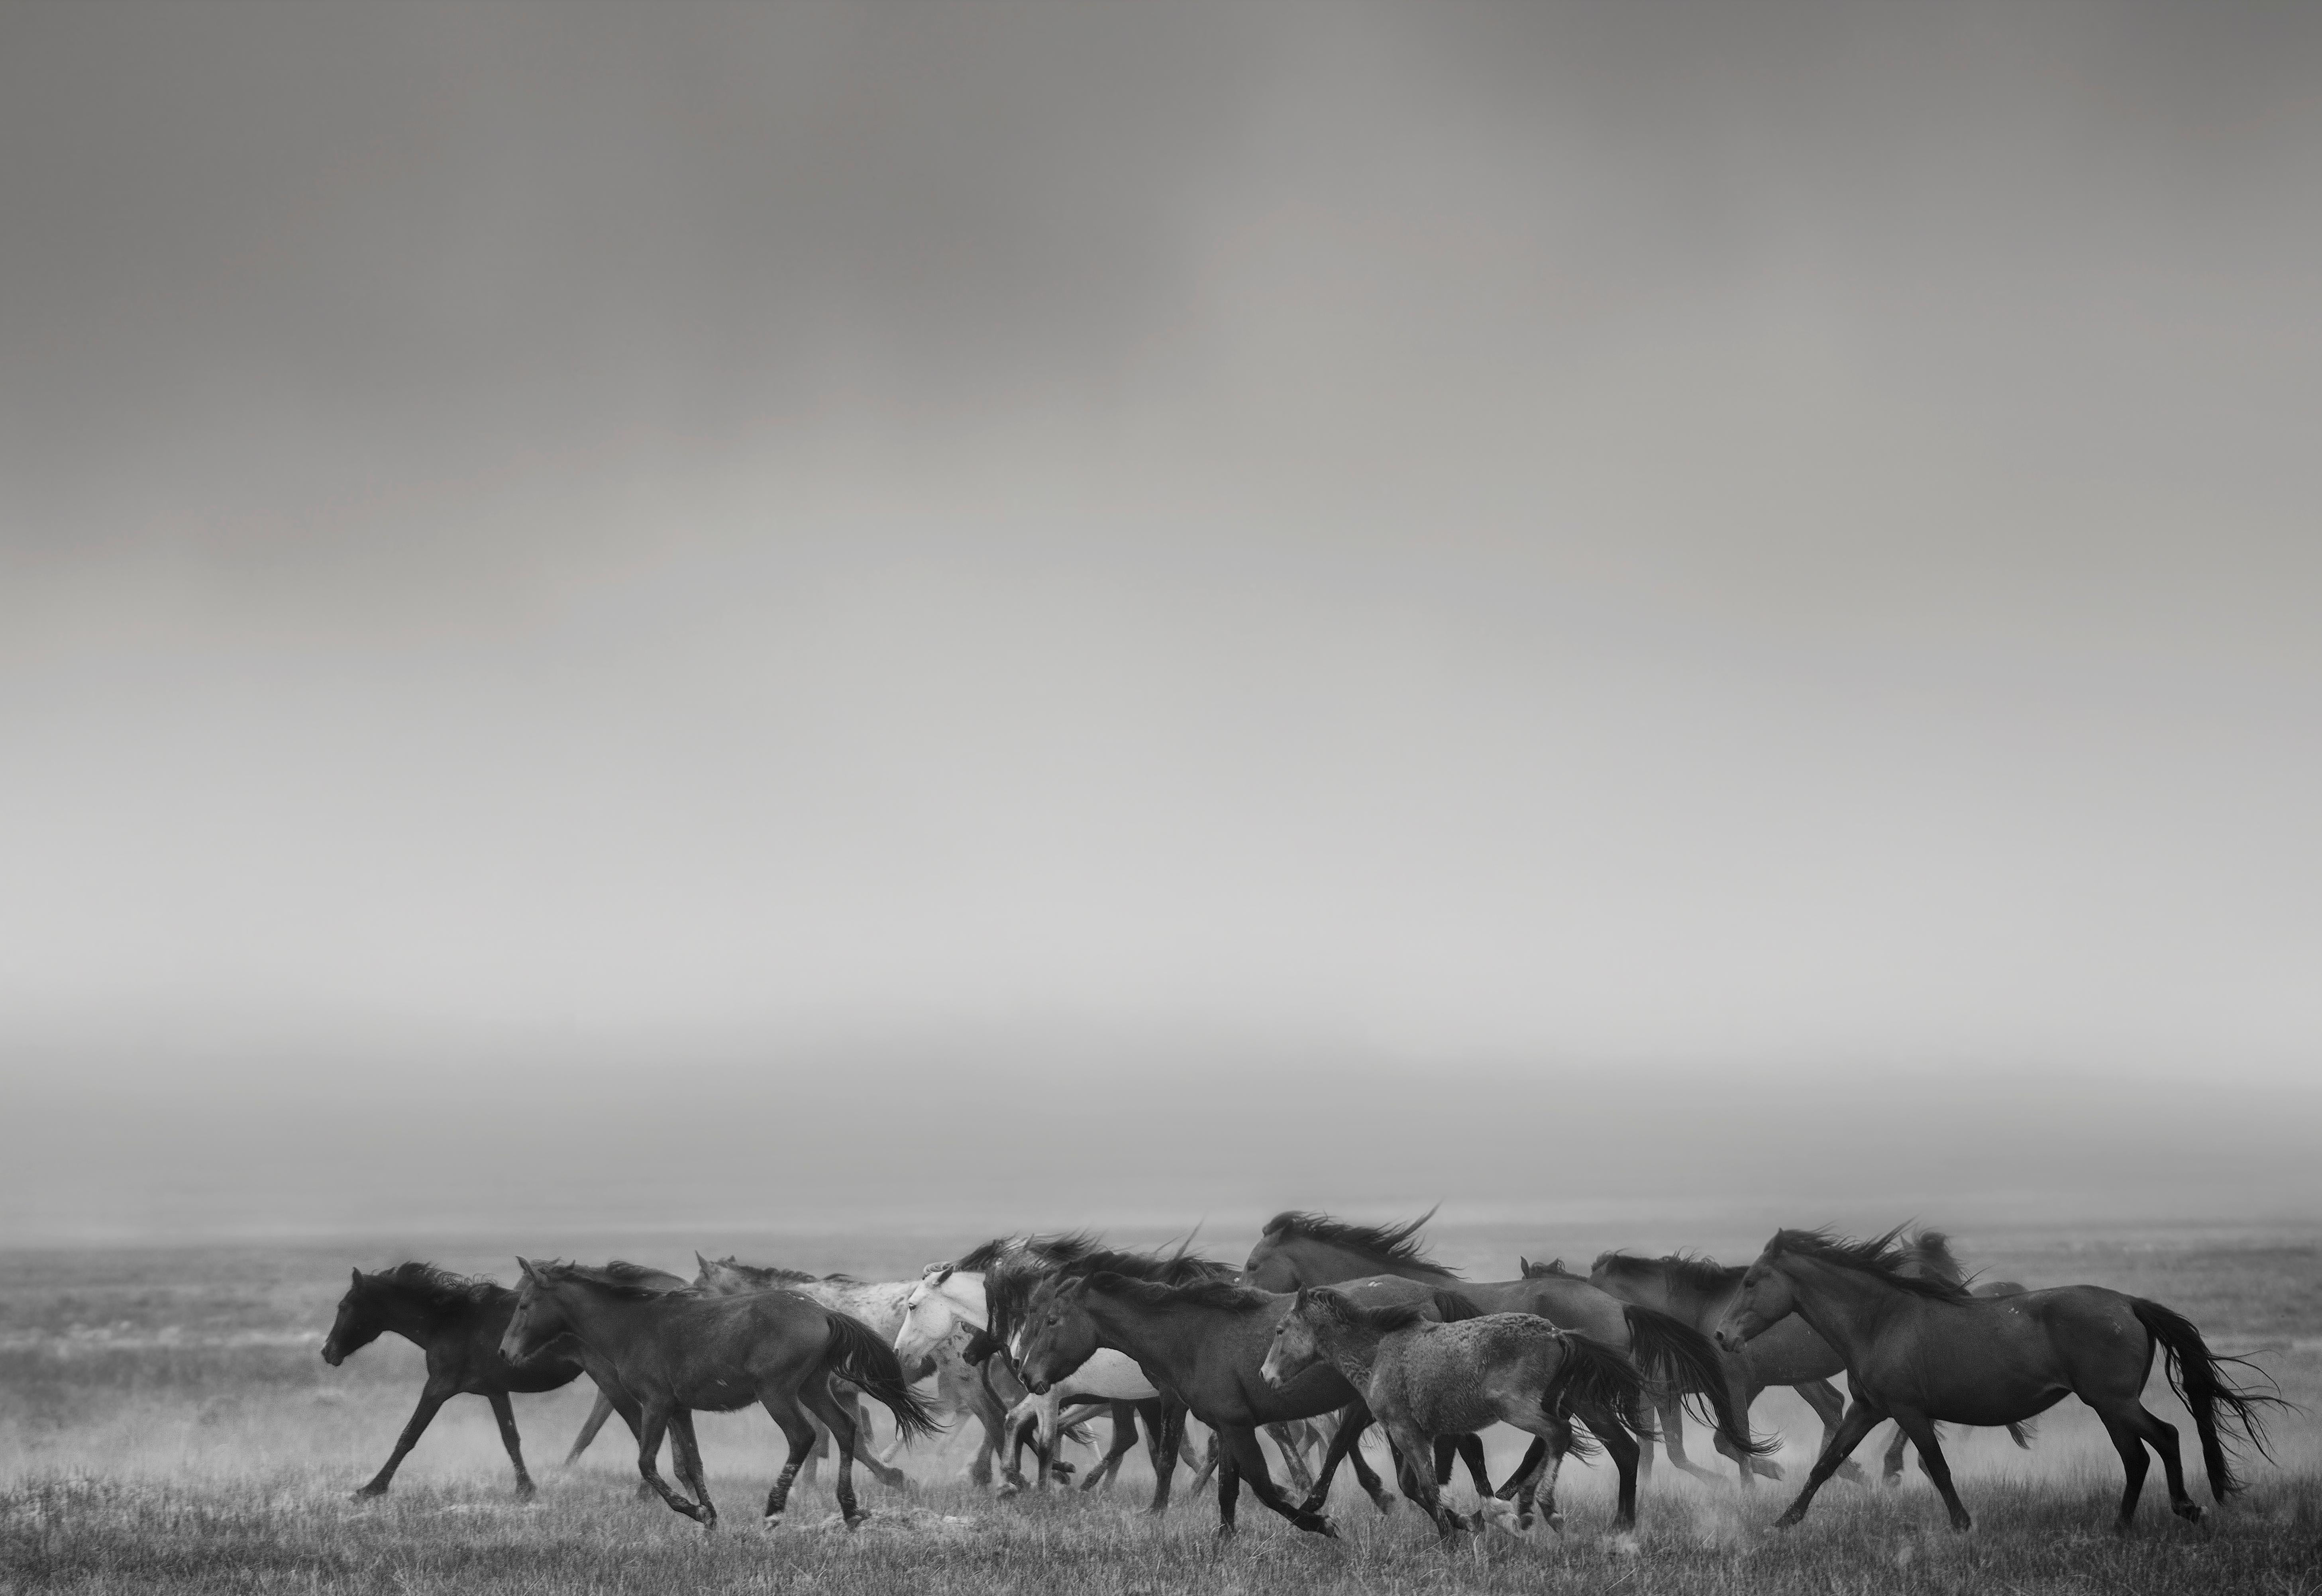 Black and White Photograph Shane Russeck - "Dream State" - Photographie en noir et blanc 40x50 Chevaux sauvages Mustangs Signée